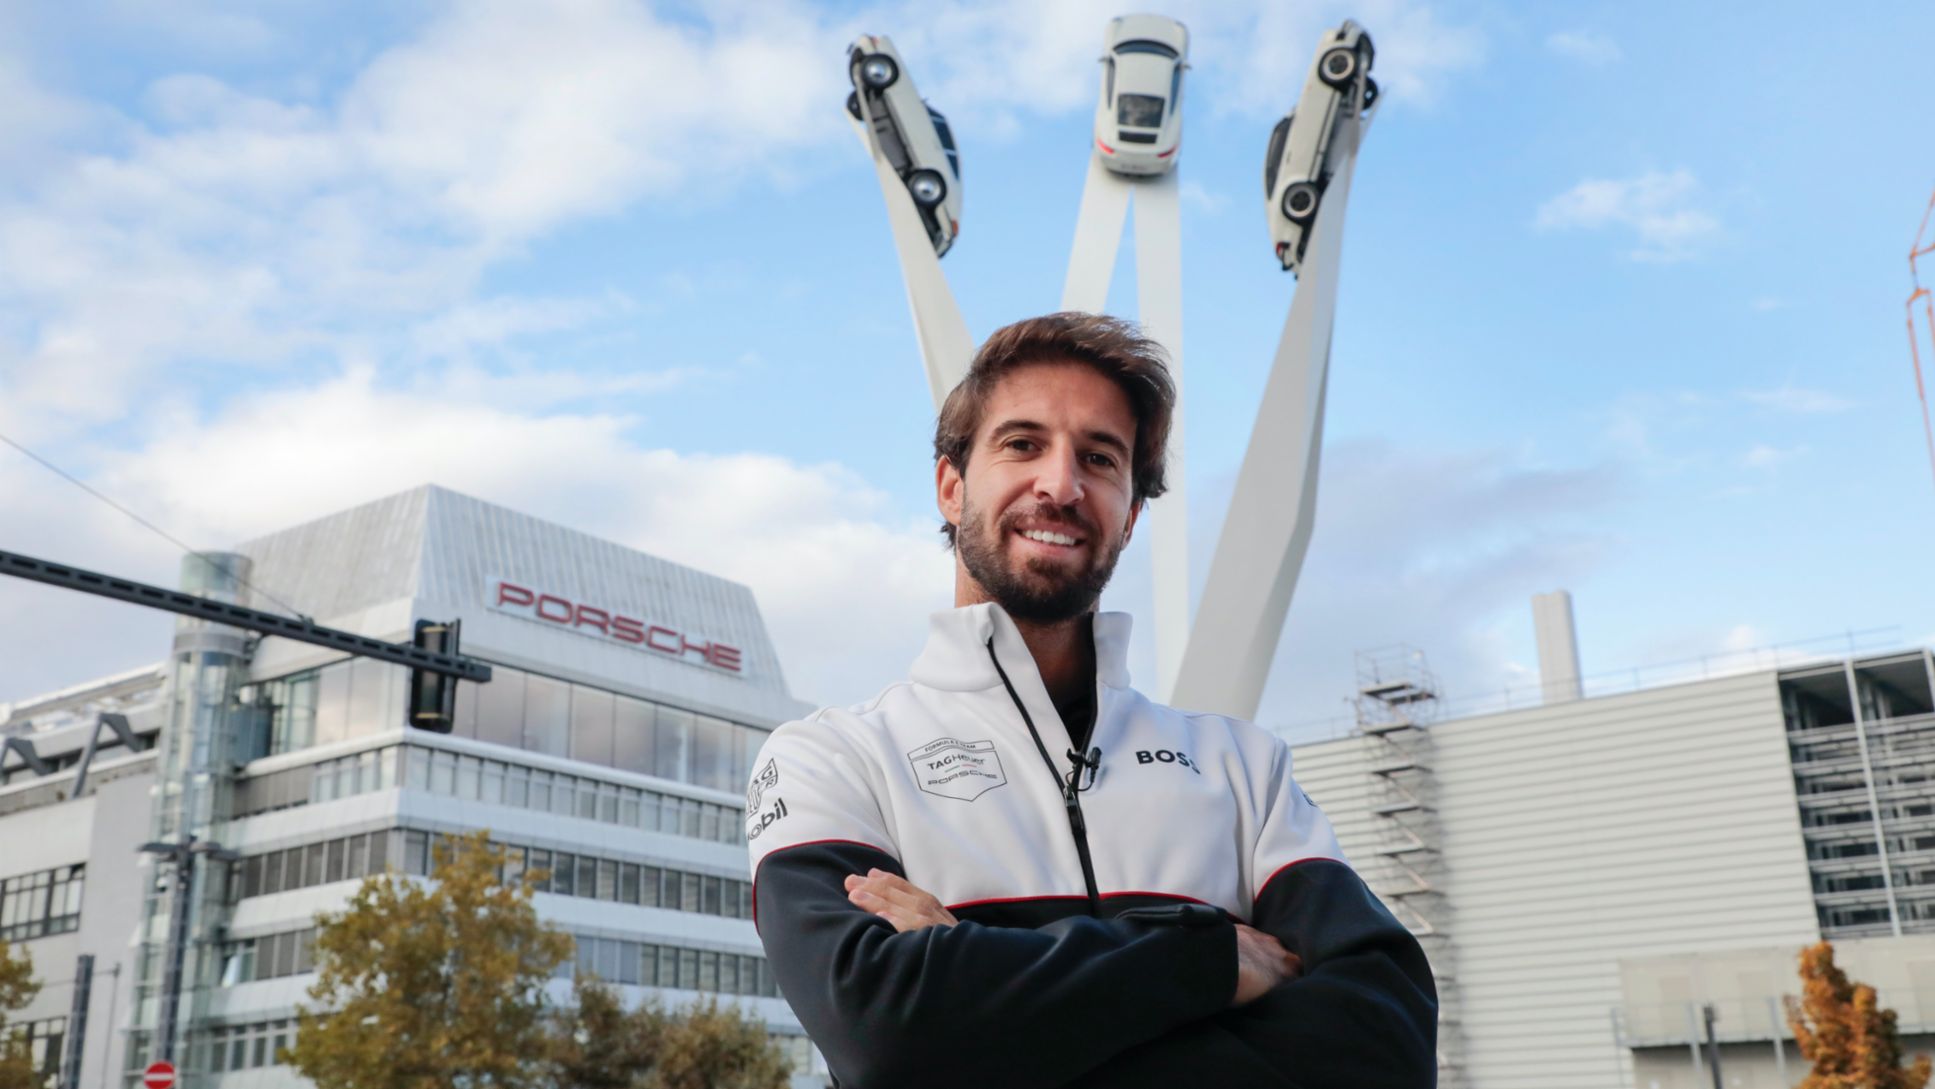 António Félix da Costa, Porsche-Werksfahrer, Stuttgart-Zuffenhausen, Deutschland, 2022, Porsche AG